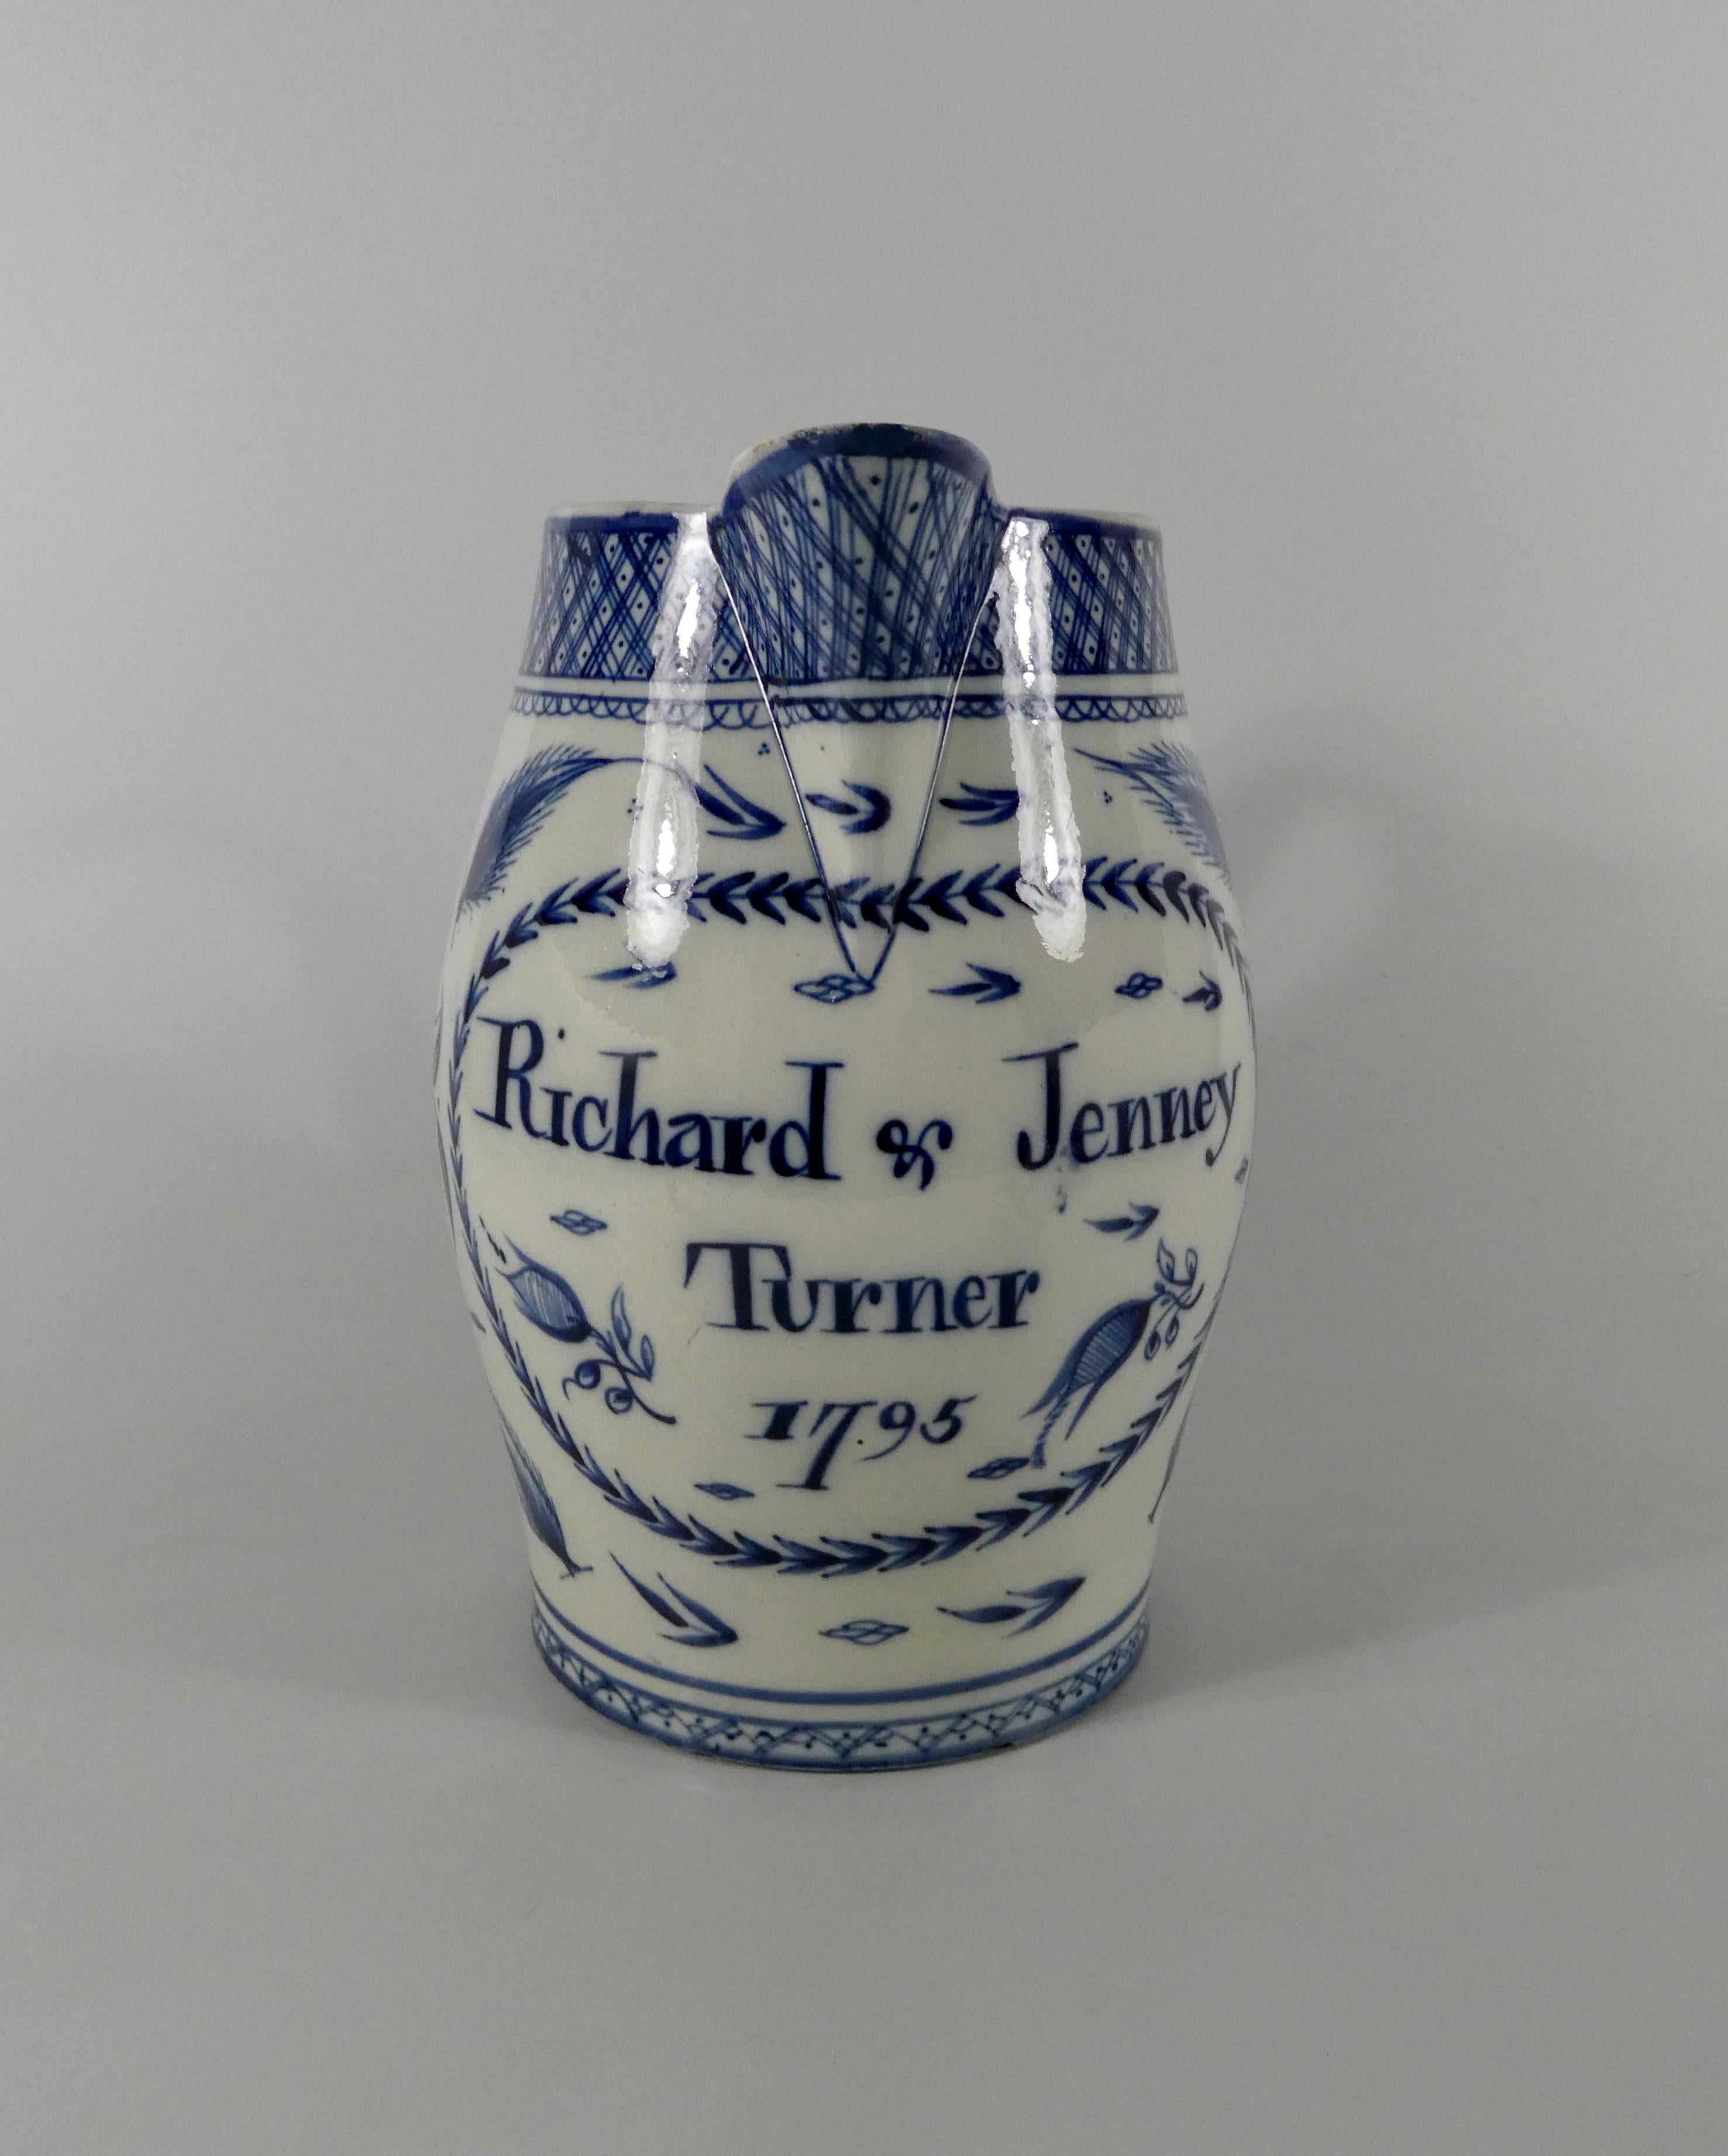 English pearlware jug, ‘Richard & Jenney Turner, 1795’.